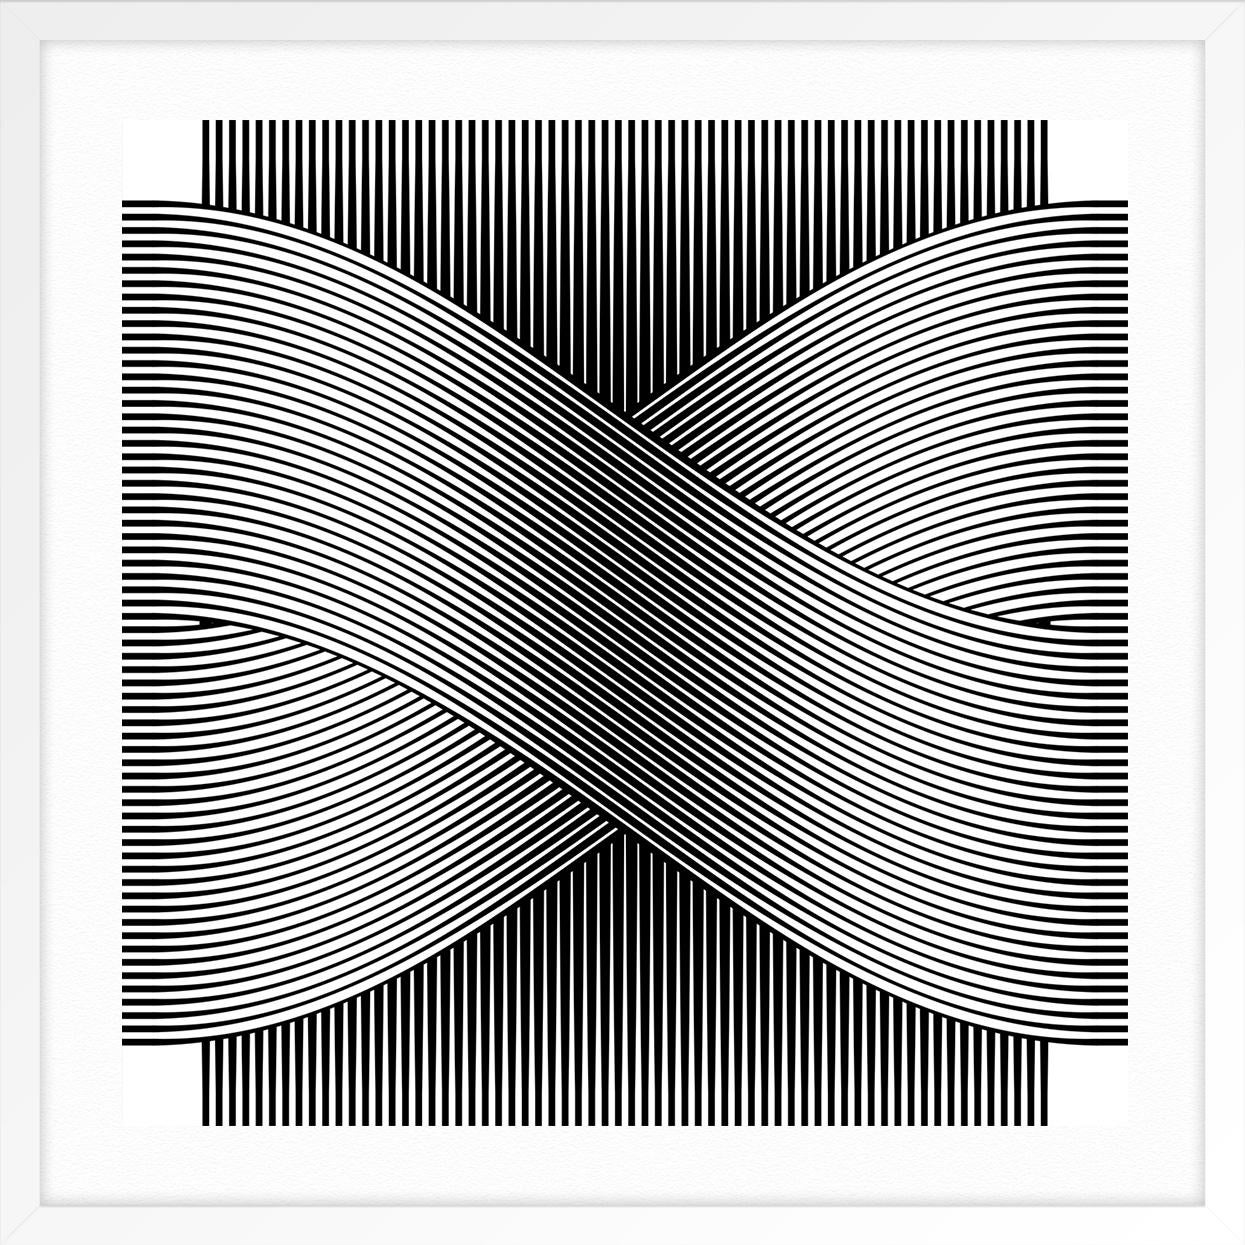 Continuation 3 01 - Black Abstract Photograph by John Harman